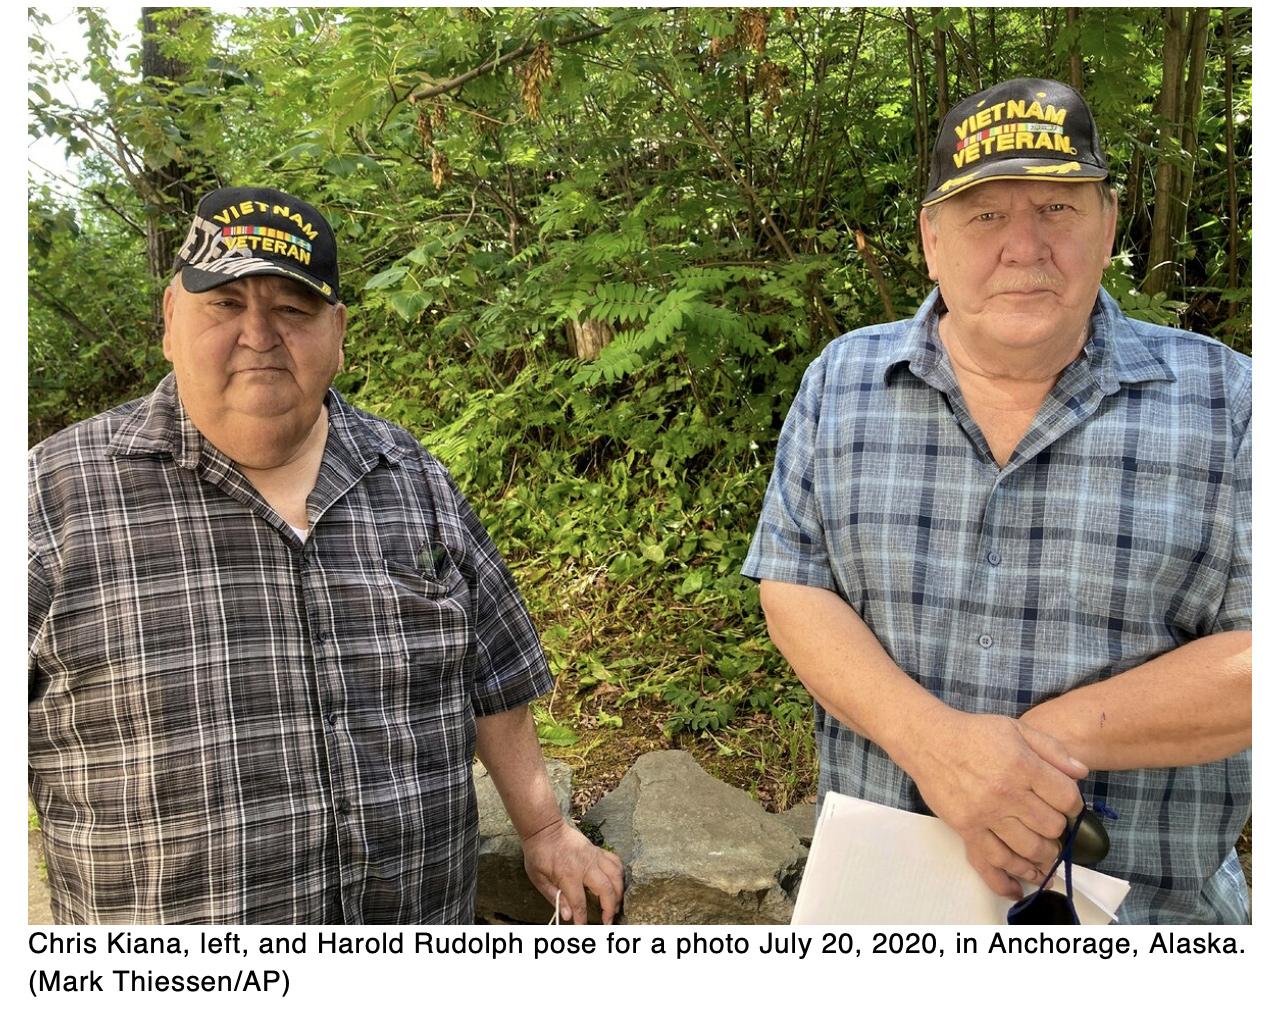  Program allows some Alaska Native Vietnam vets to get land